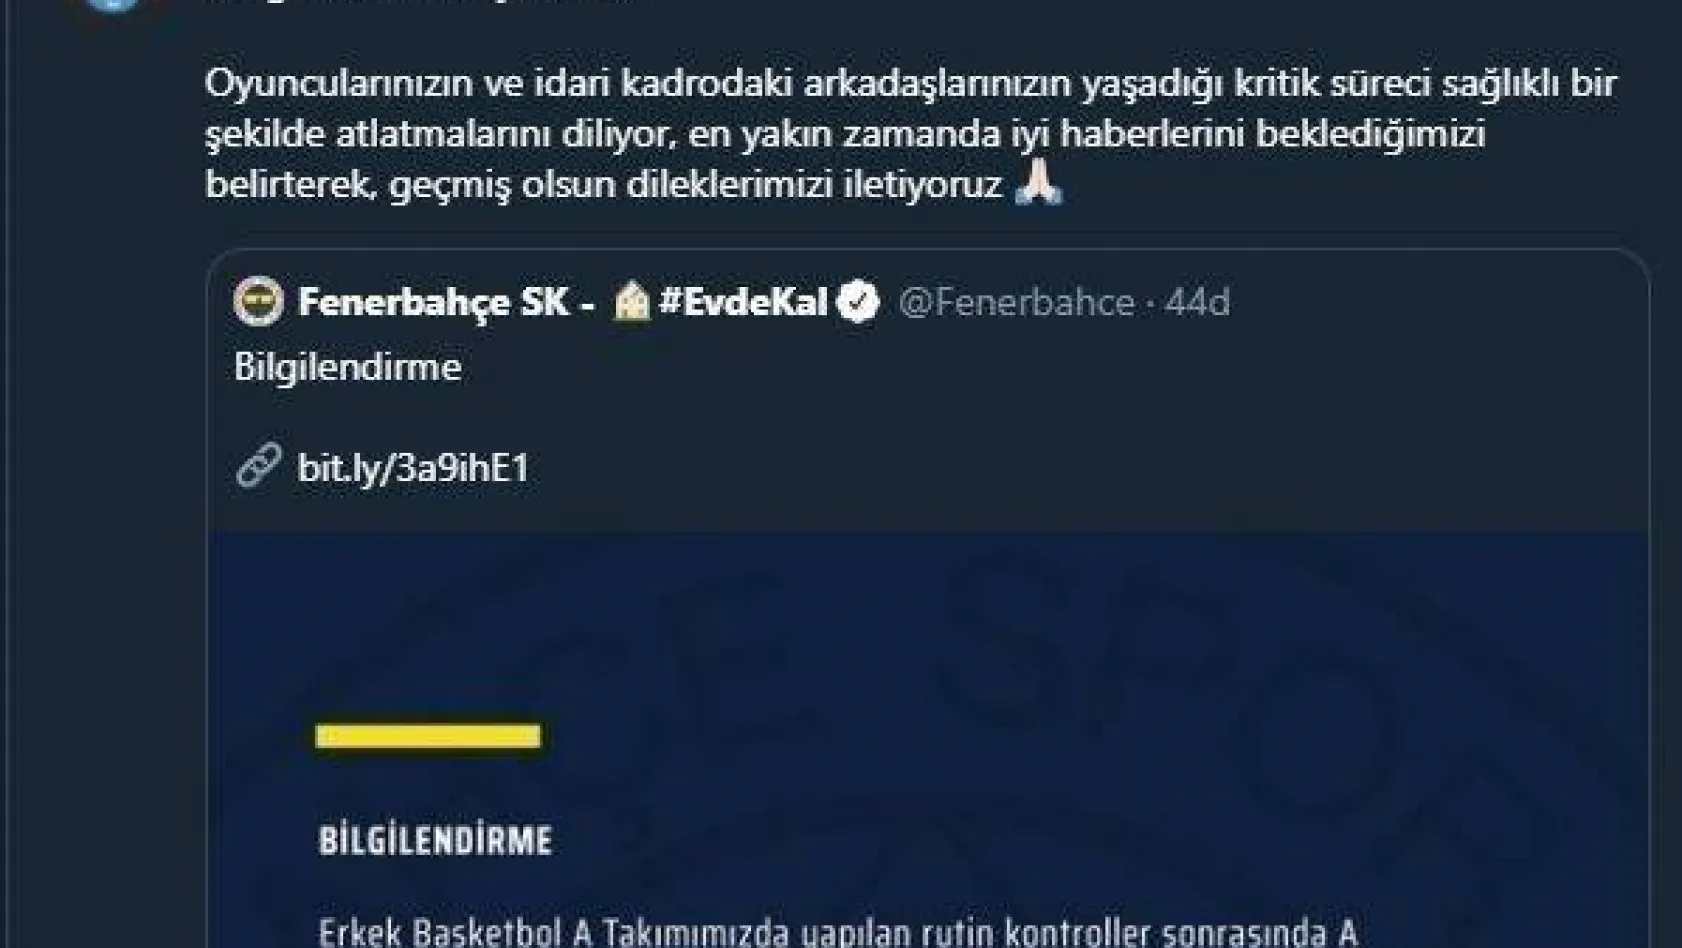 Trabzonspor'dan Fenerbahçe'ye geçmiş olsun mesajı